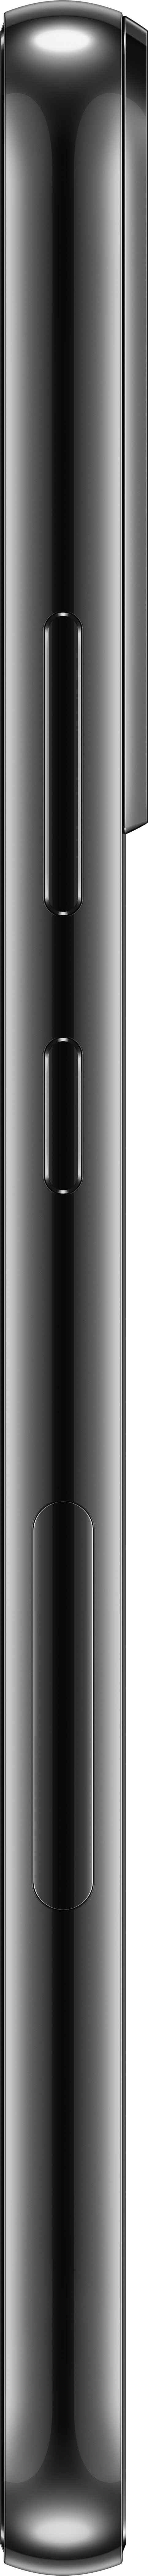 Samsung Galaxy S22 Plus 5G, 128GB/ 8GB RAM, Unlocked - Phantom Black  (Renewed)